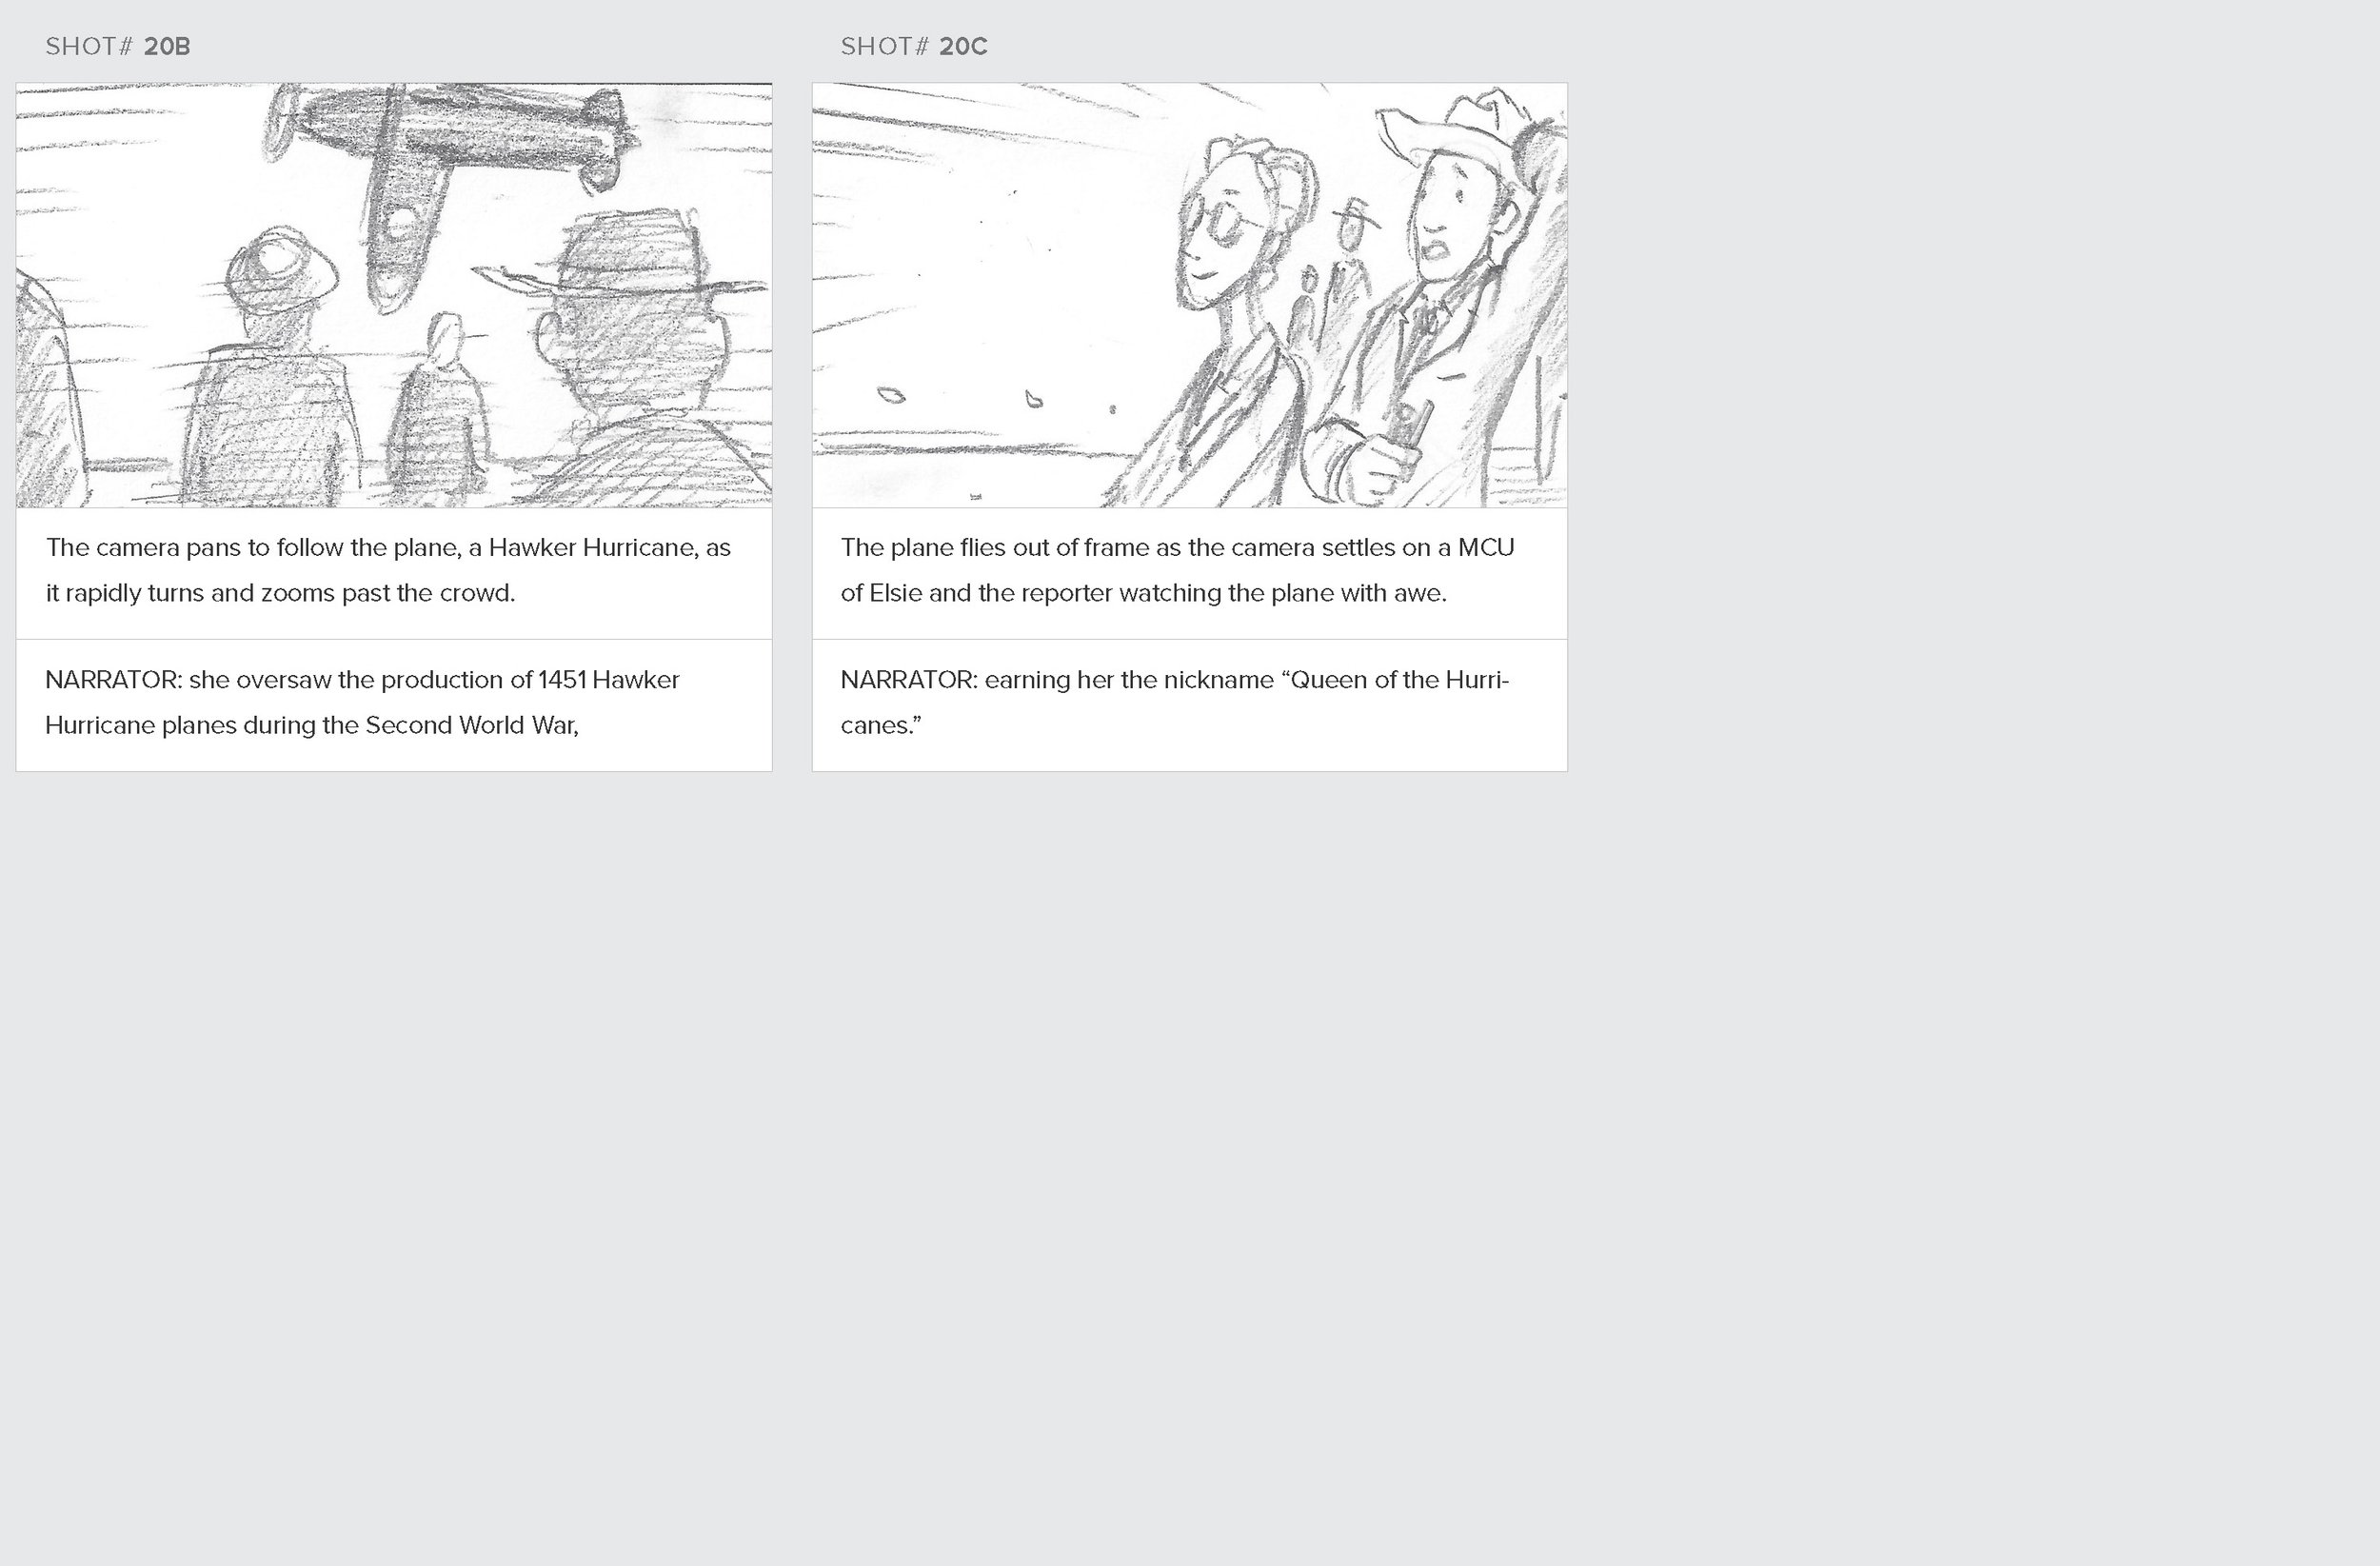 HistoricaElsie_StoryboardA_INTERNAL_05_Page_7 copy.jpg